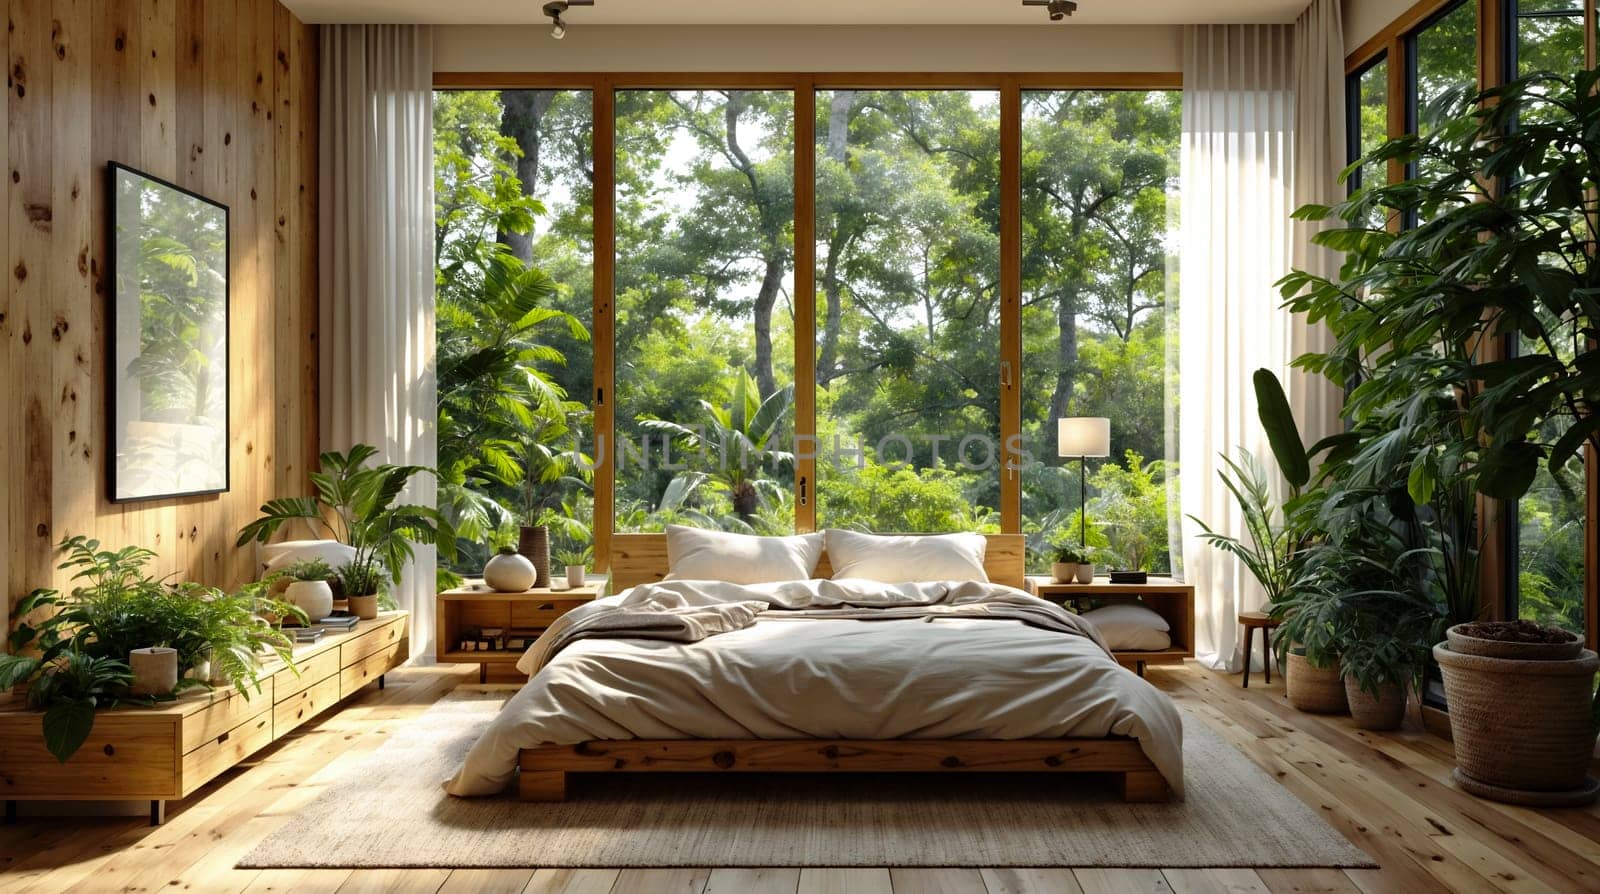 Serene Bedroom Overlooking Woods in Daylight by chrisroll